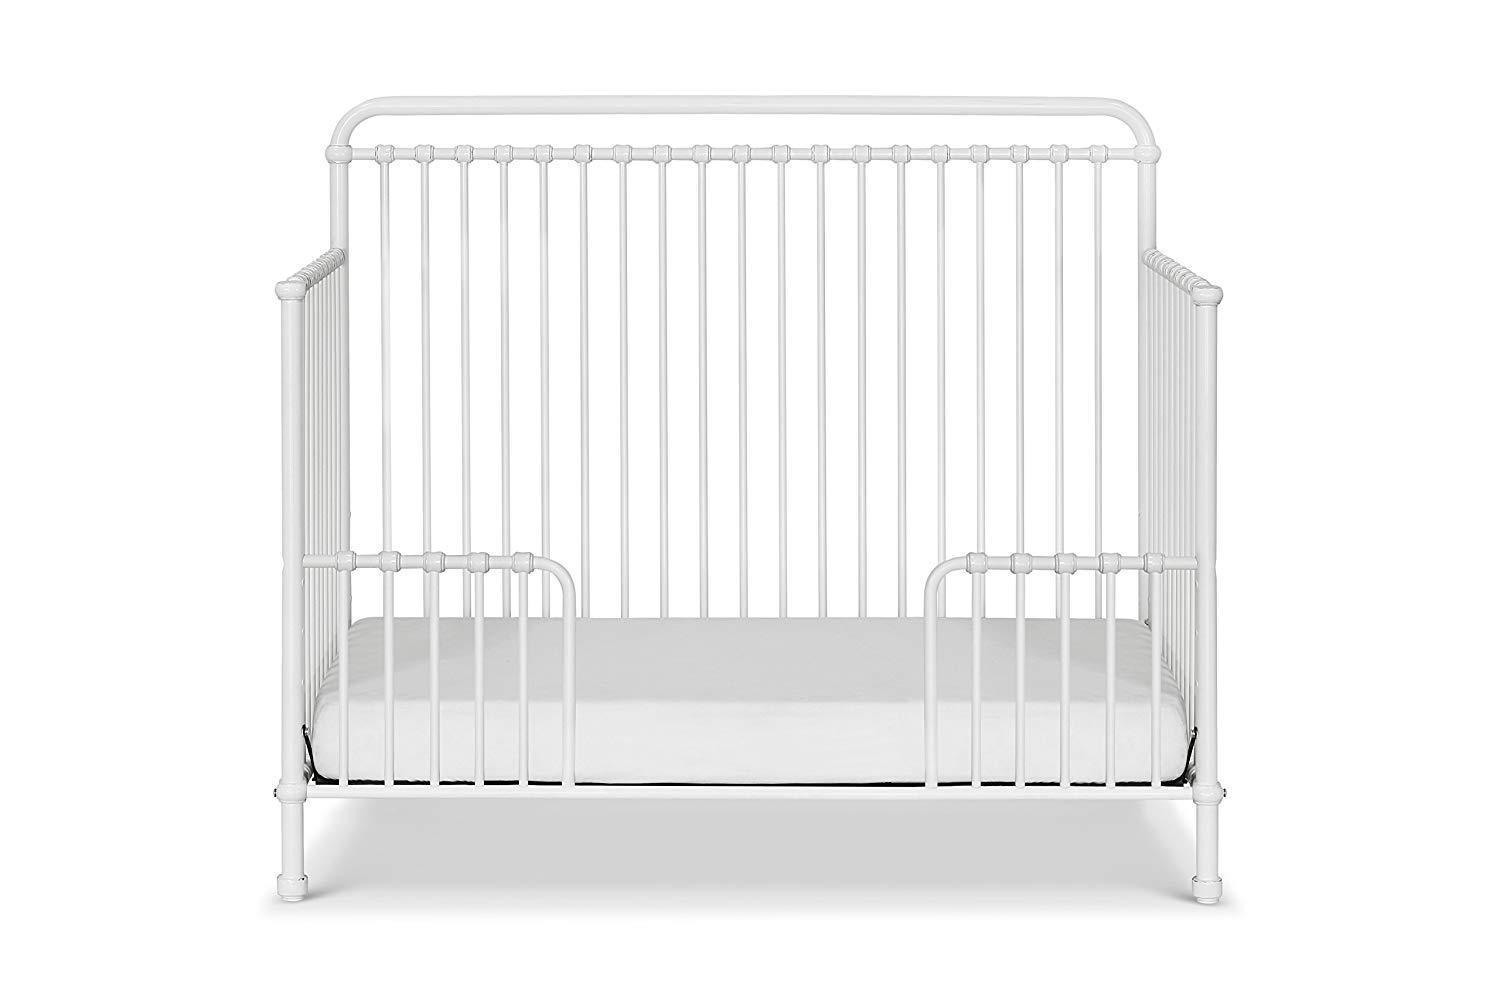 Million Dollar Baby Classic Winston 4-in-1 Convertible Iron Crib